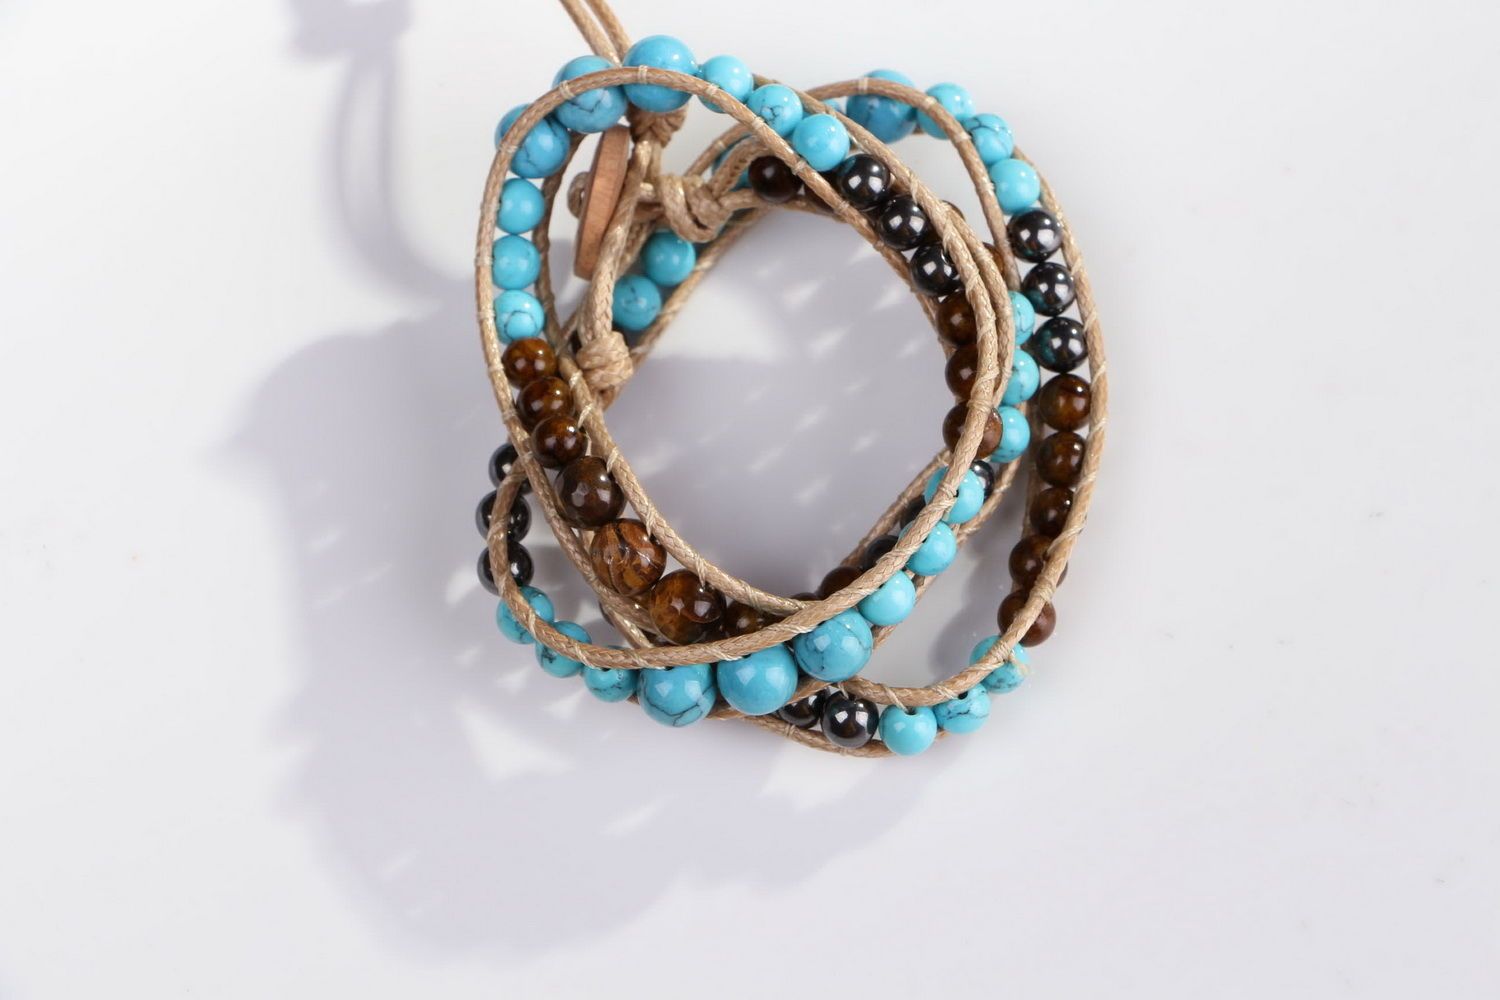 Bracelet made of tiger's eye stone, hematite and turquoise photo 4